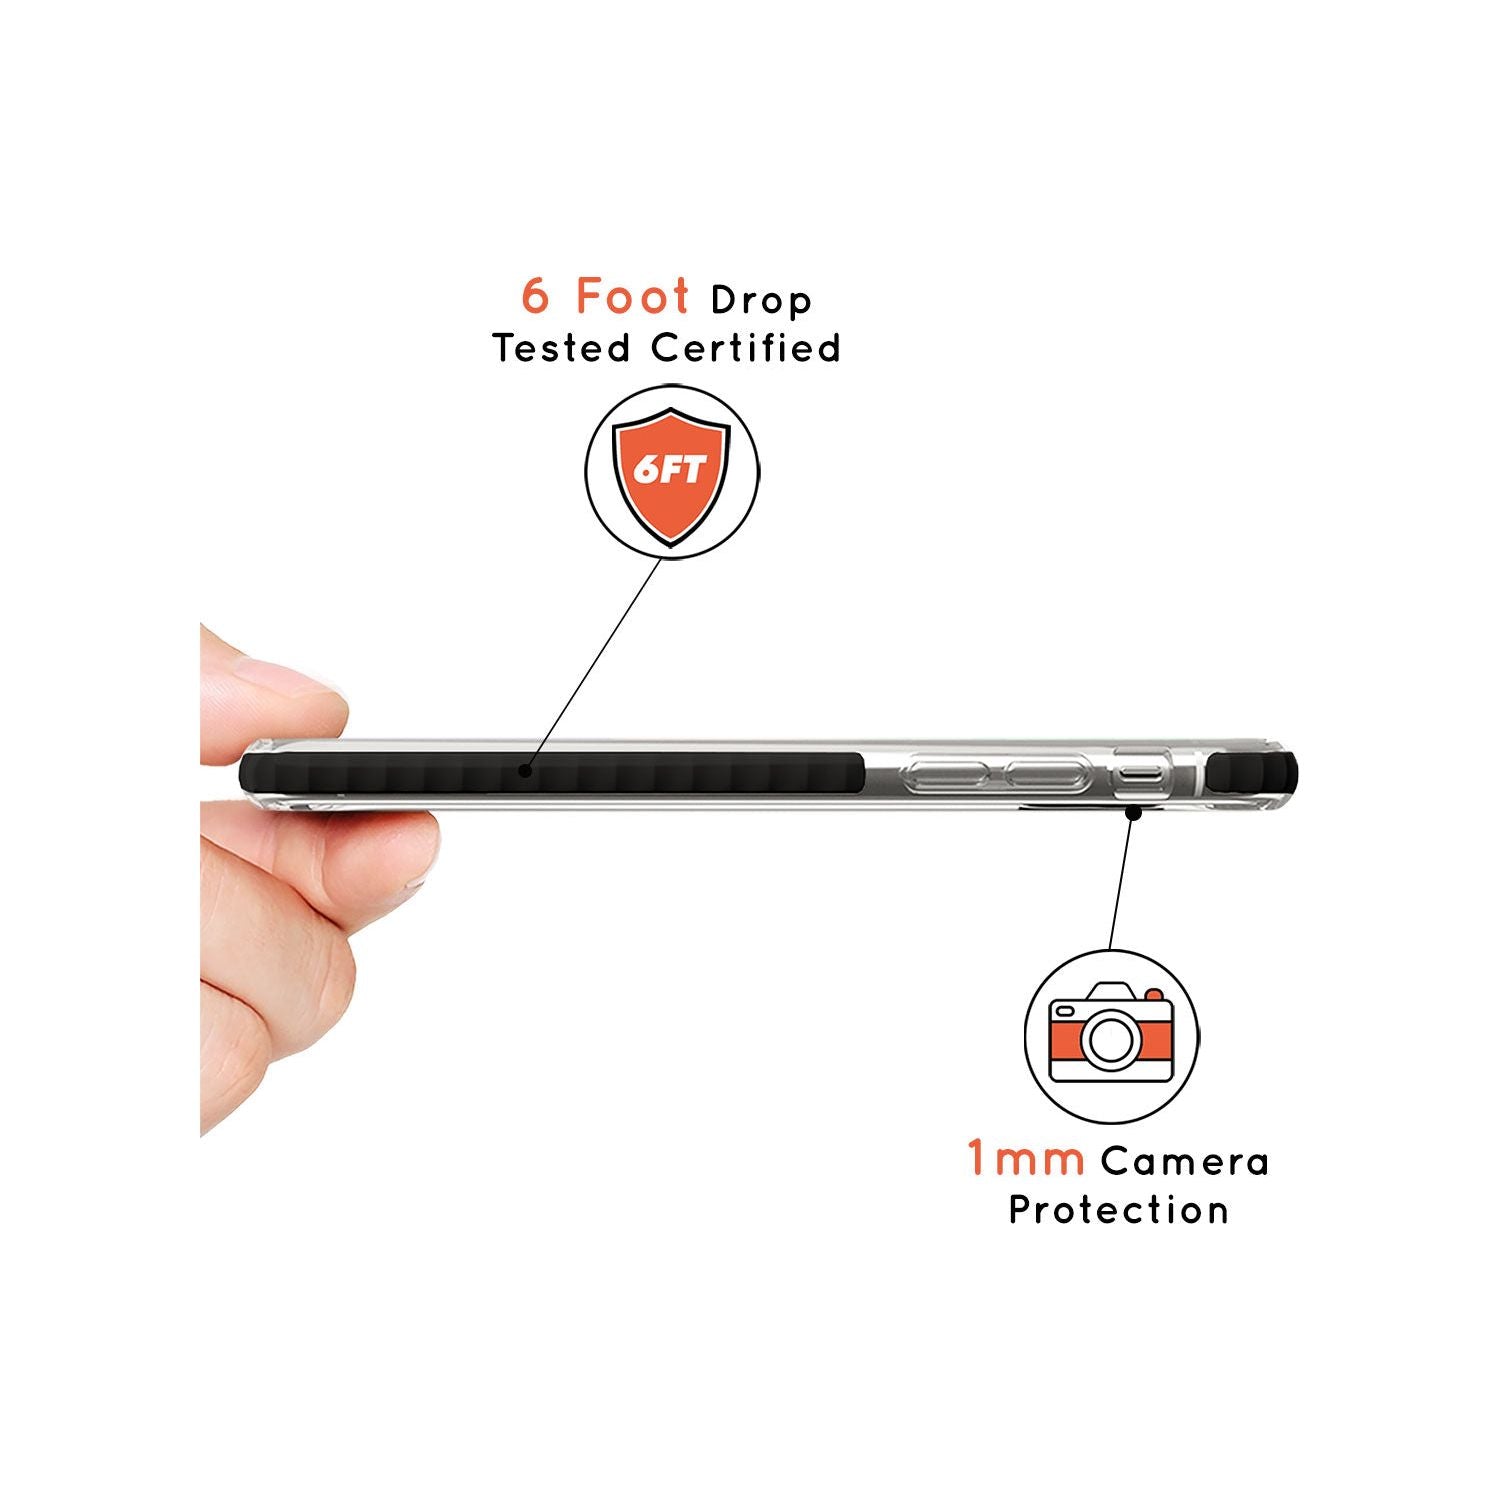 Medical Inspired Design Stethoscope Heart Black Impact Phone Case for iPhone SE 8 7 Plus